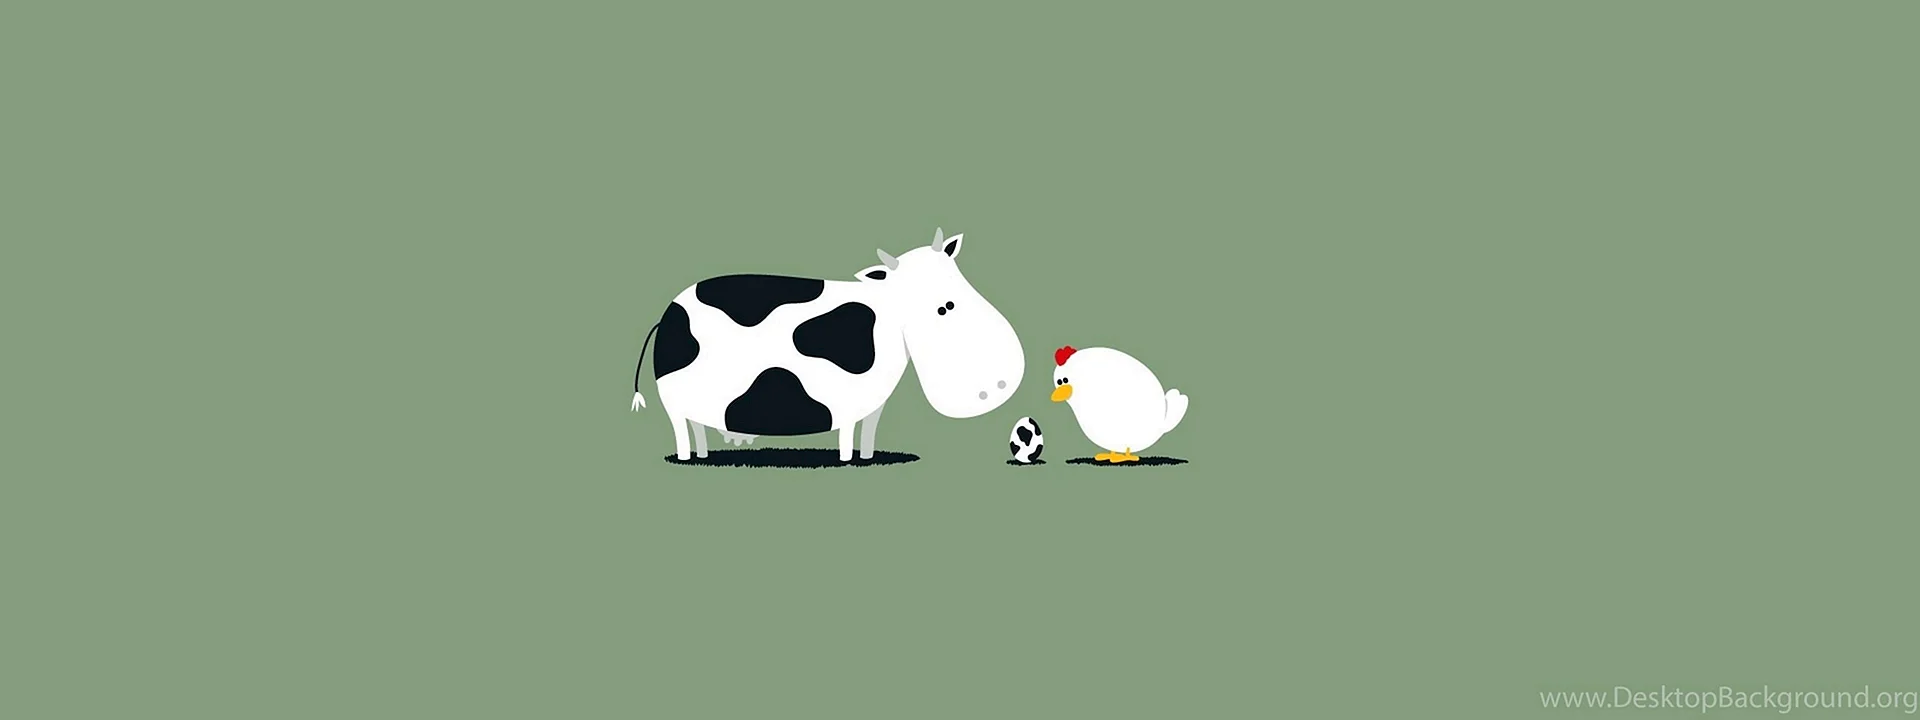 Cow Vector Wallpaper